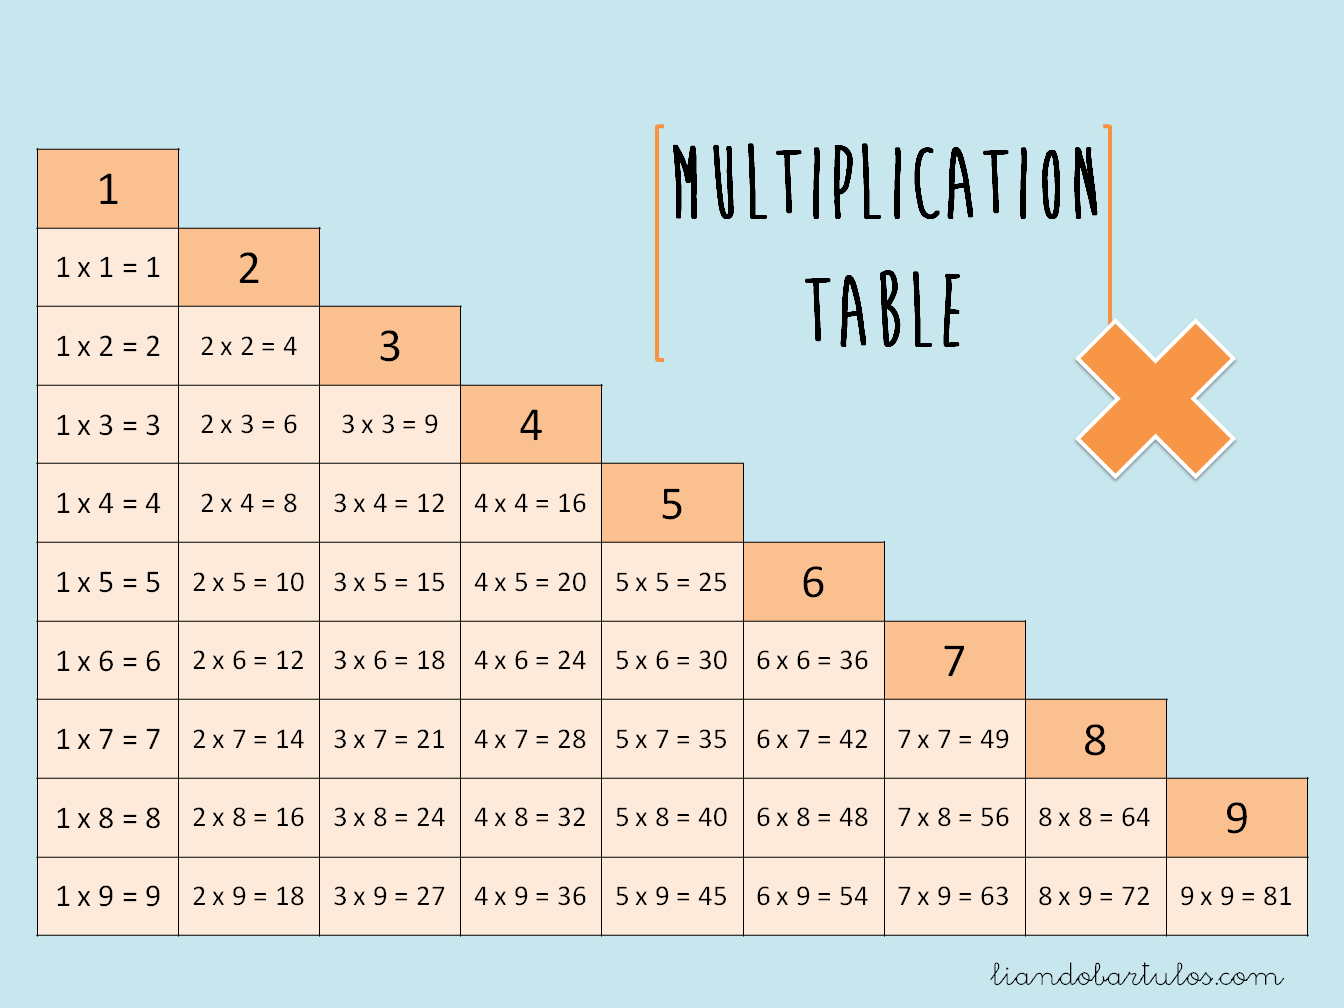 Multiplication-table